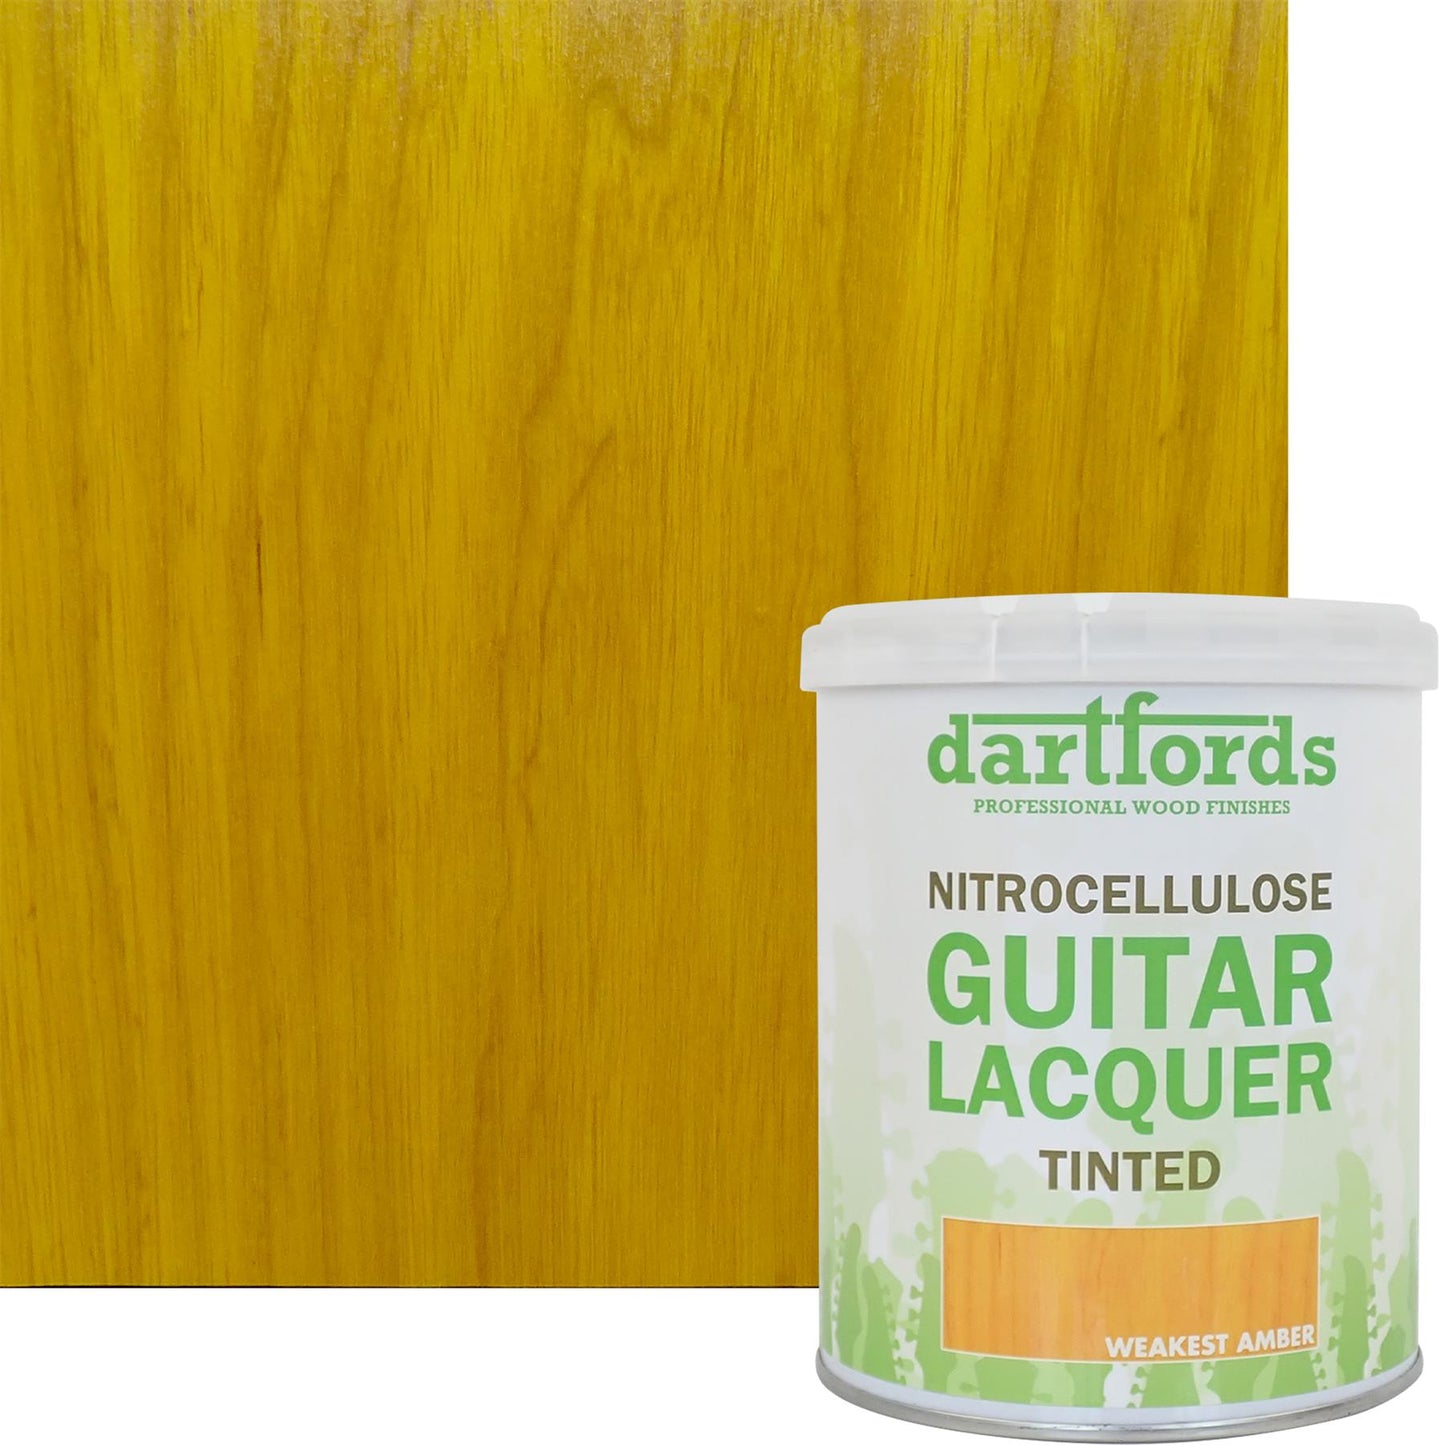 dartfords Weakest Amber Nitrocellulose Guitar Lacquer - 1 litre Tin